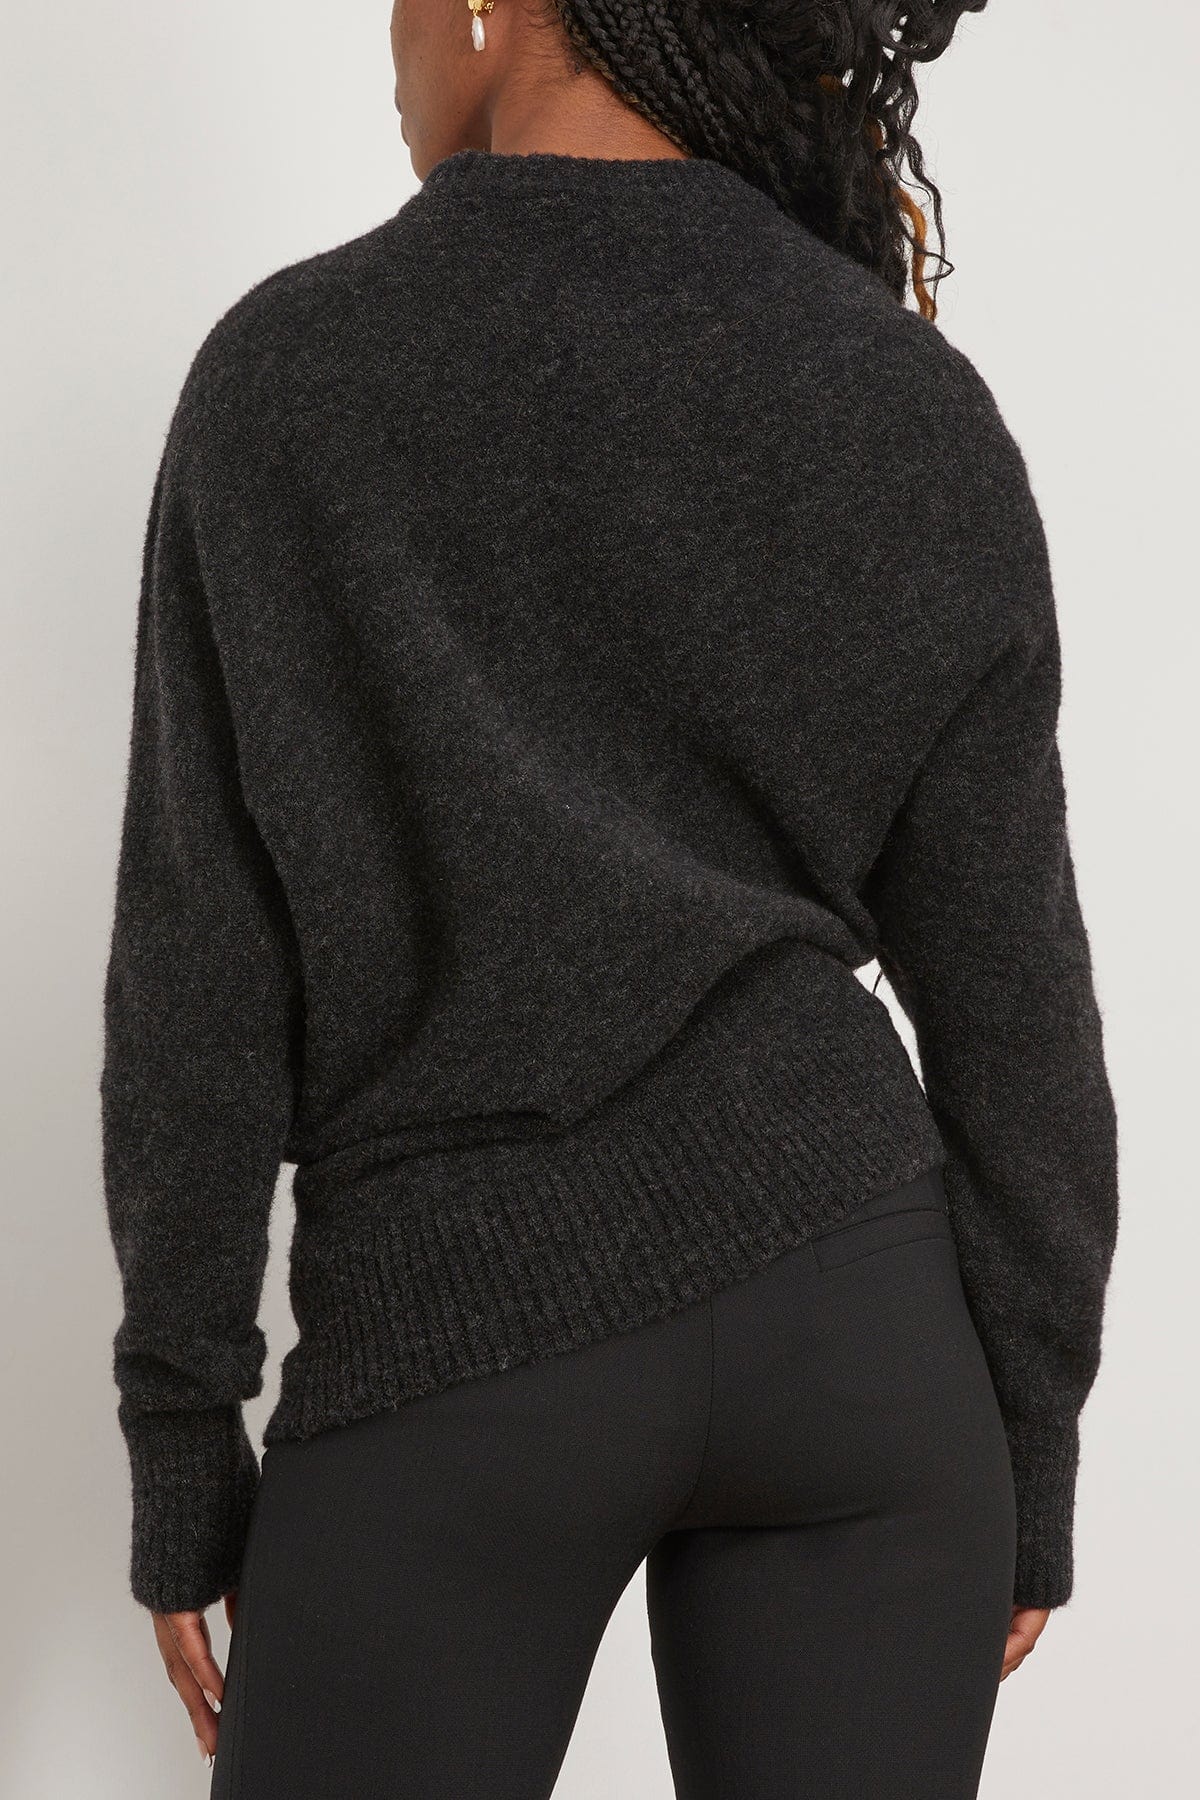 Proenza Schouler Sweaters Viscose Wool Sweater in Charcoal Proenza Schouler Viscose Wool Sweater in Charcoal